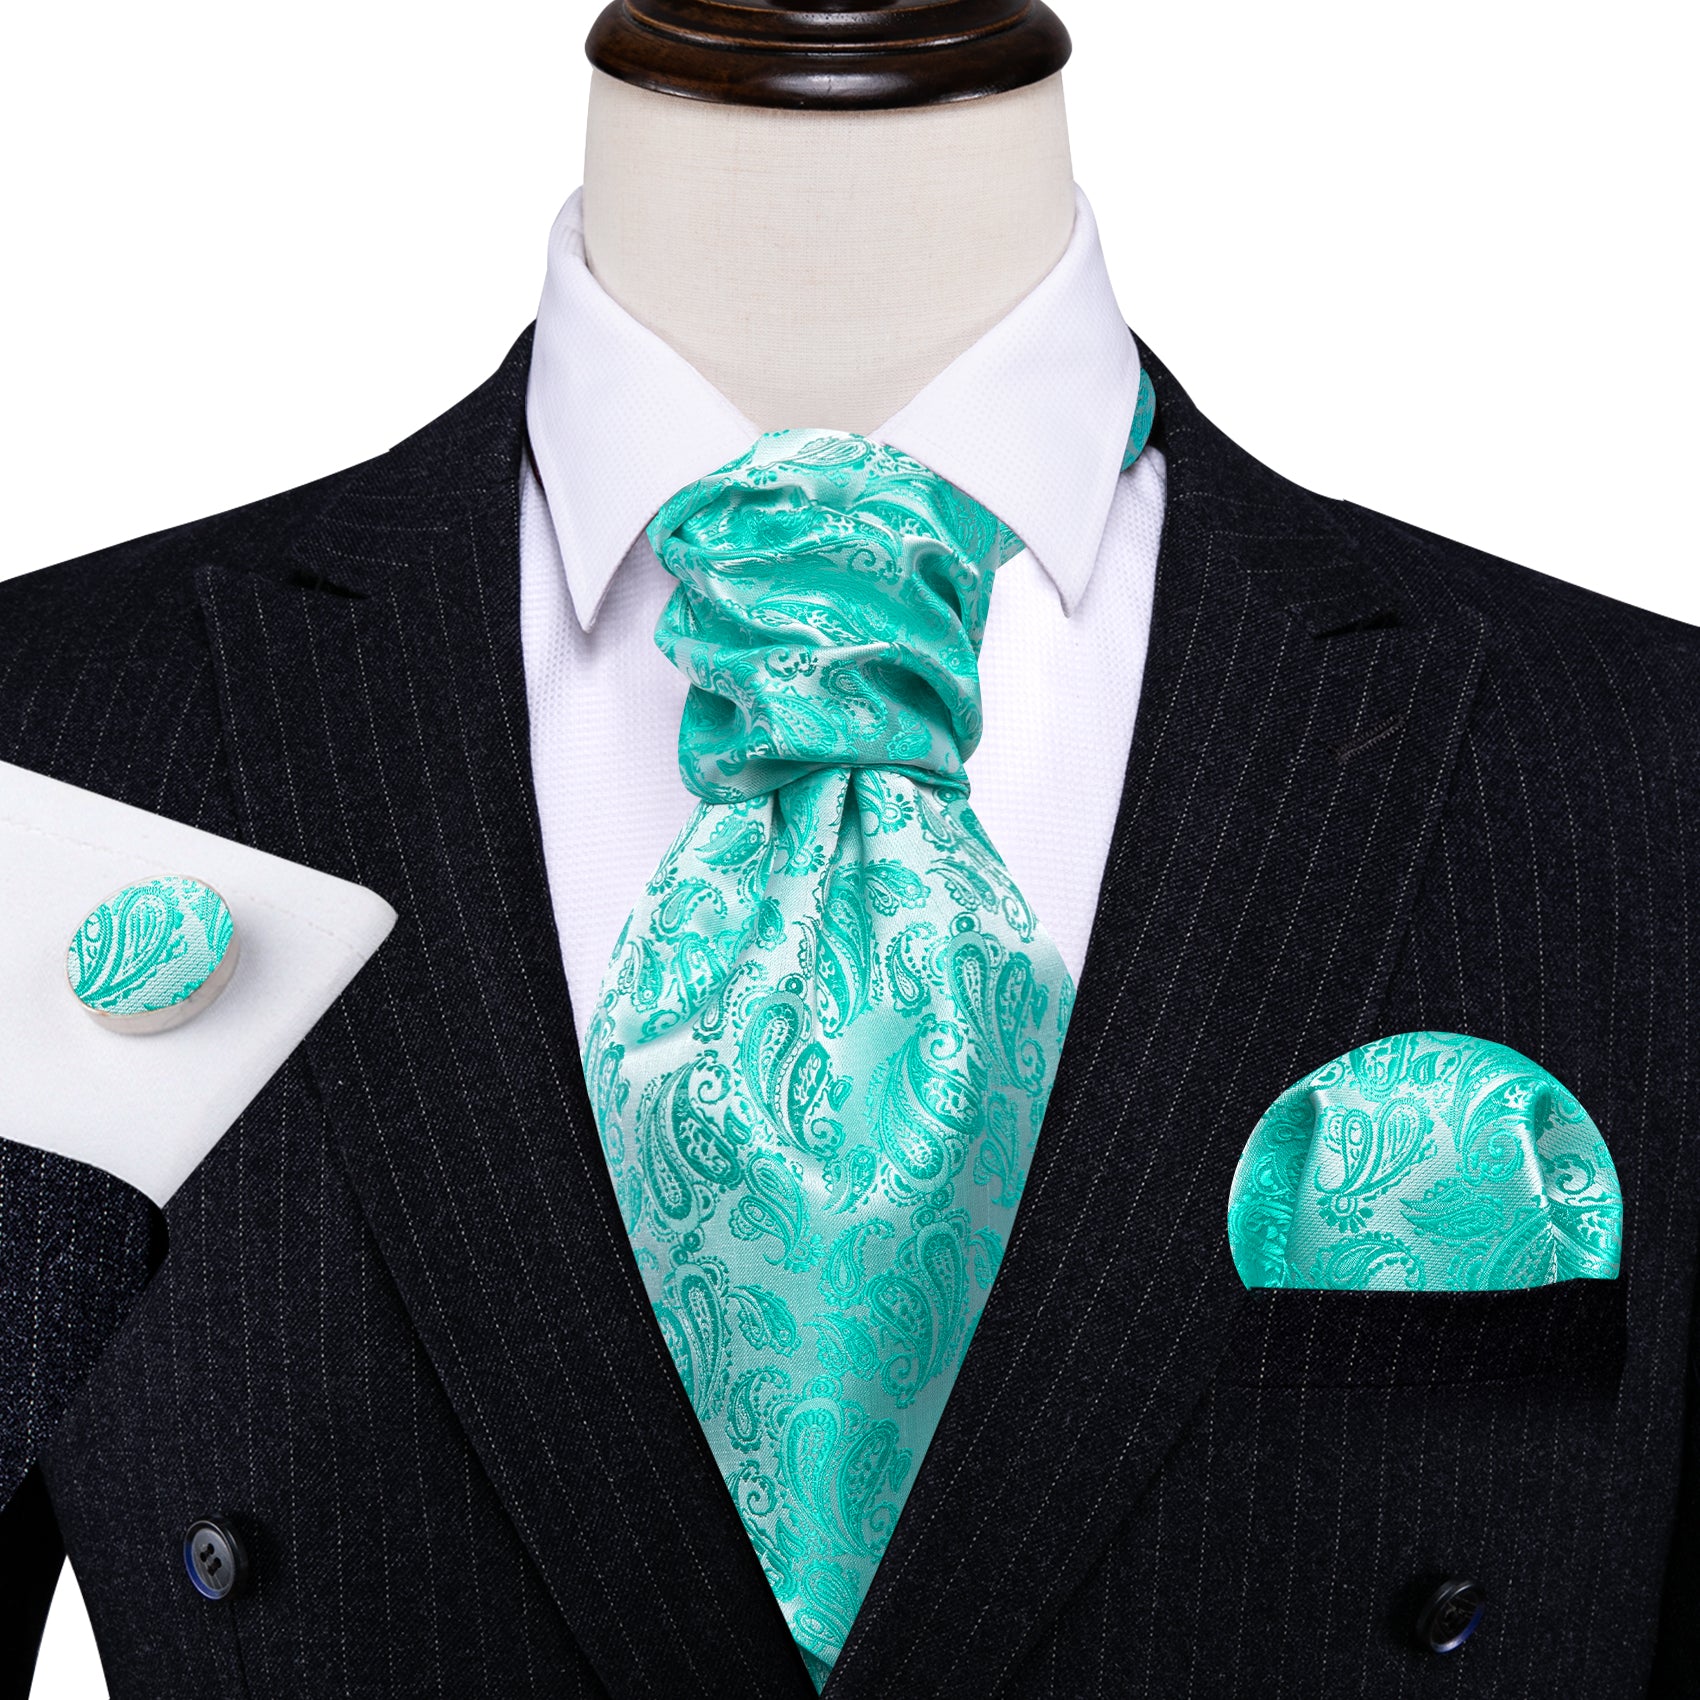 Barry.wang Men's Tie Pale Teal Paisley Silk Ascot Tie Handkerchief Cufflinks Set